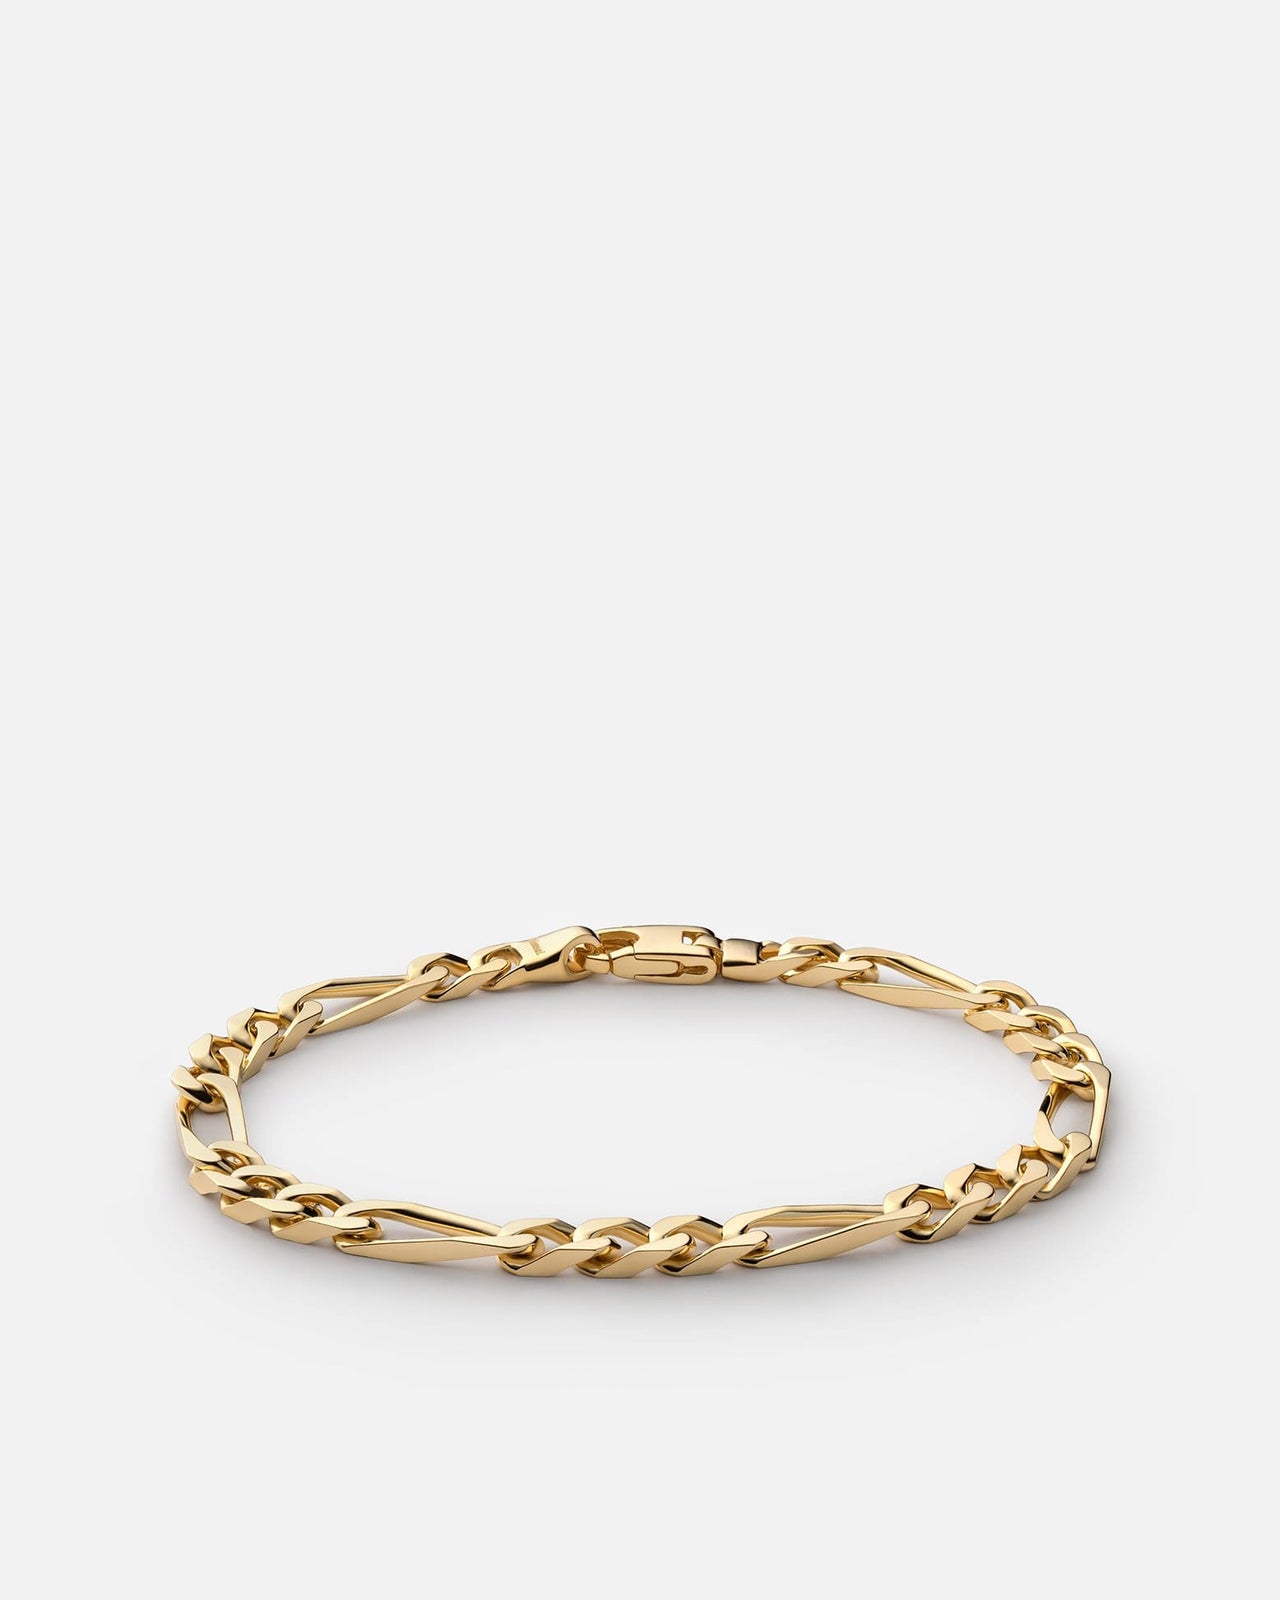 5mm Figaro Chain Bracelet, Gold Vermeil | Men's Bracelets | Miansai